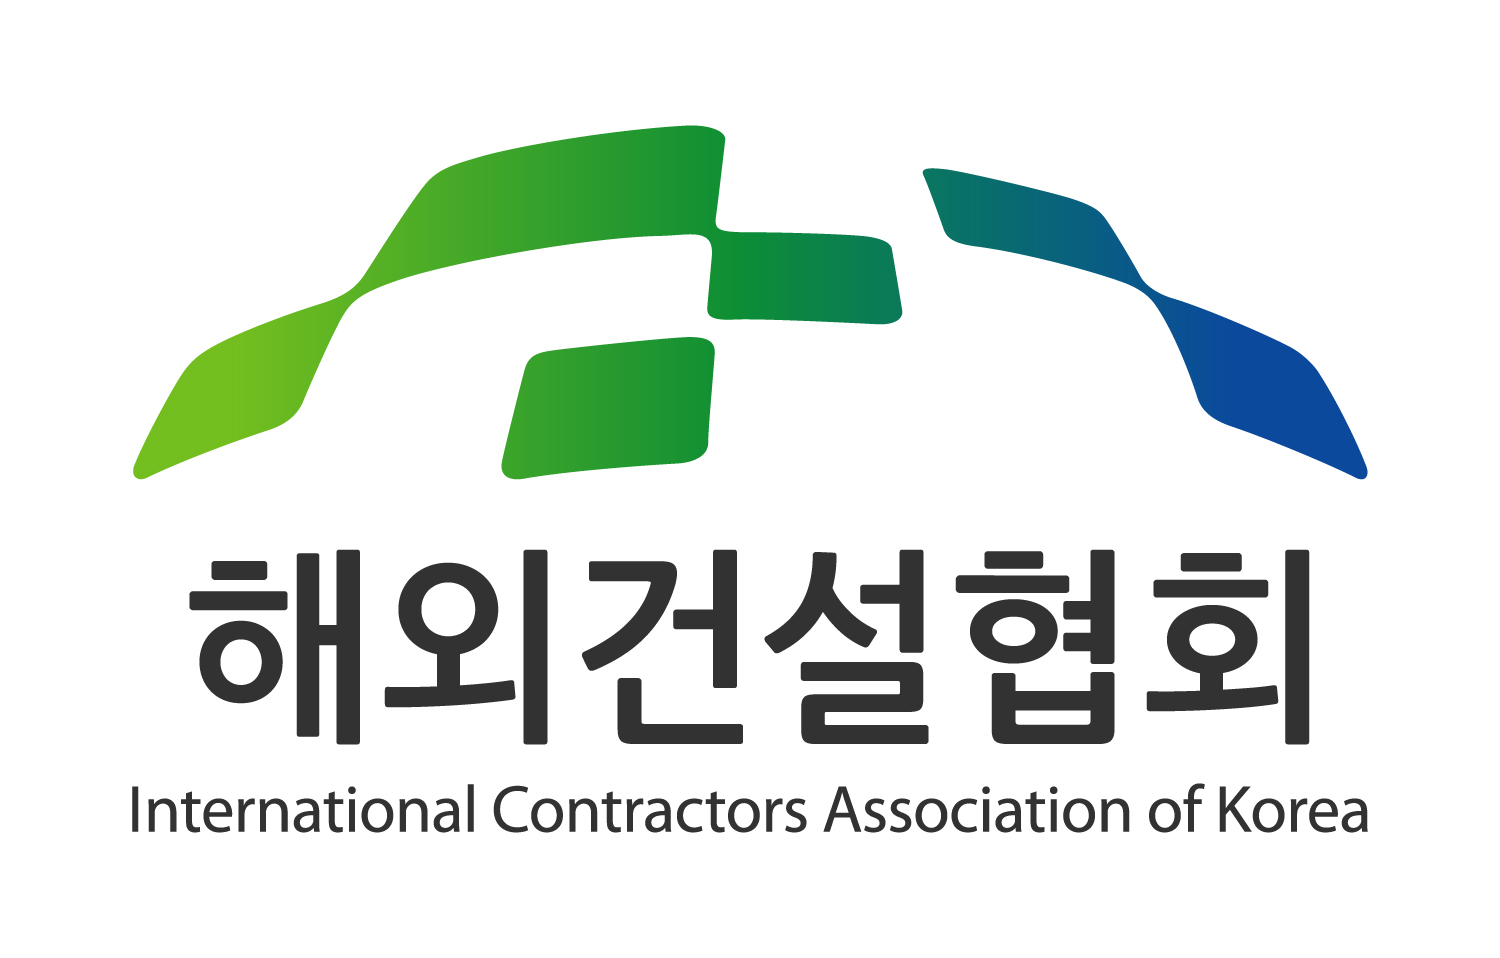 International Contractors Association of Korea